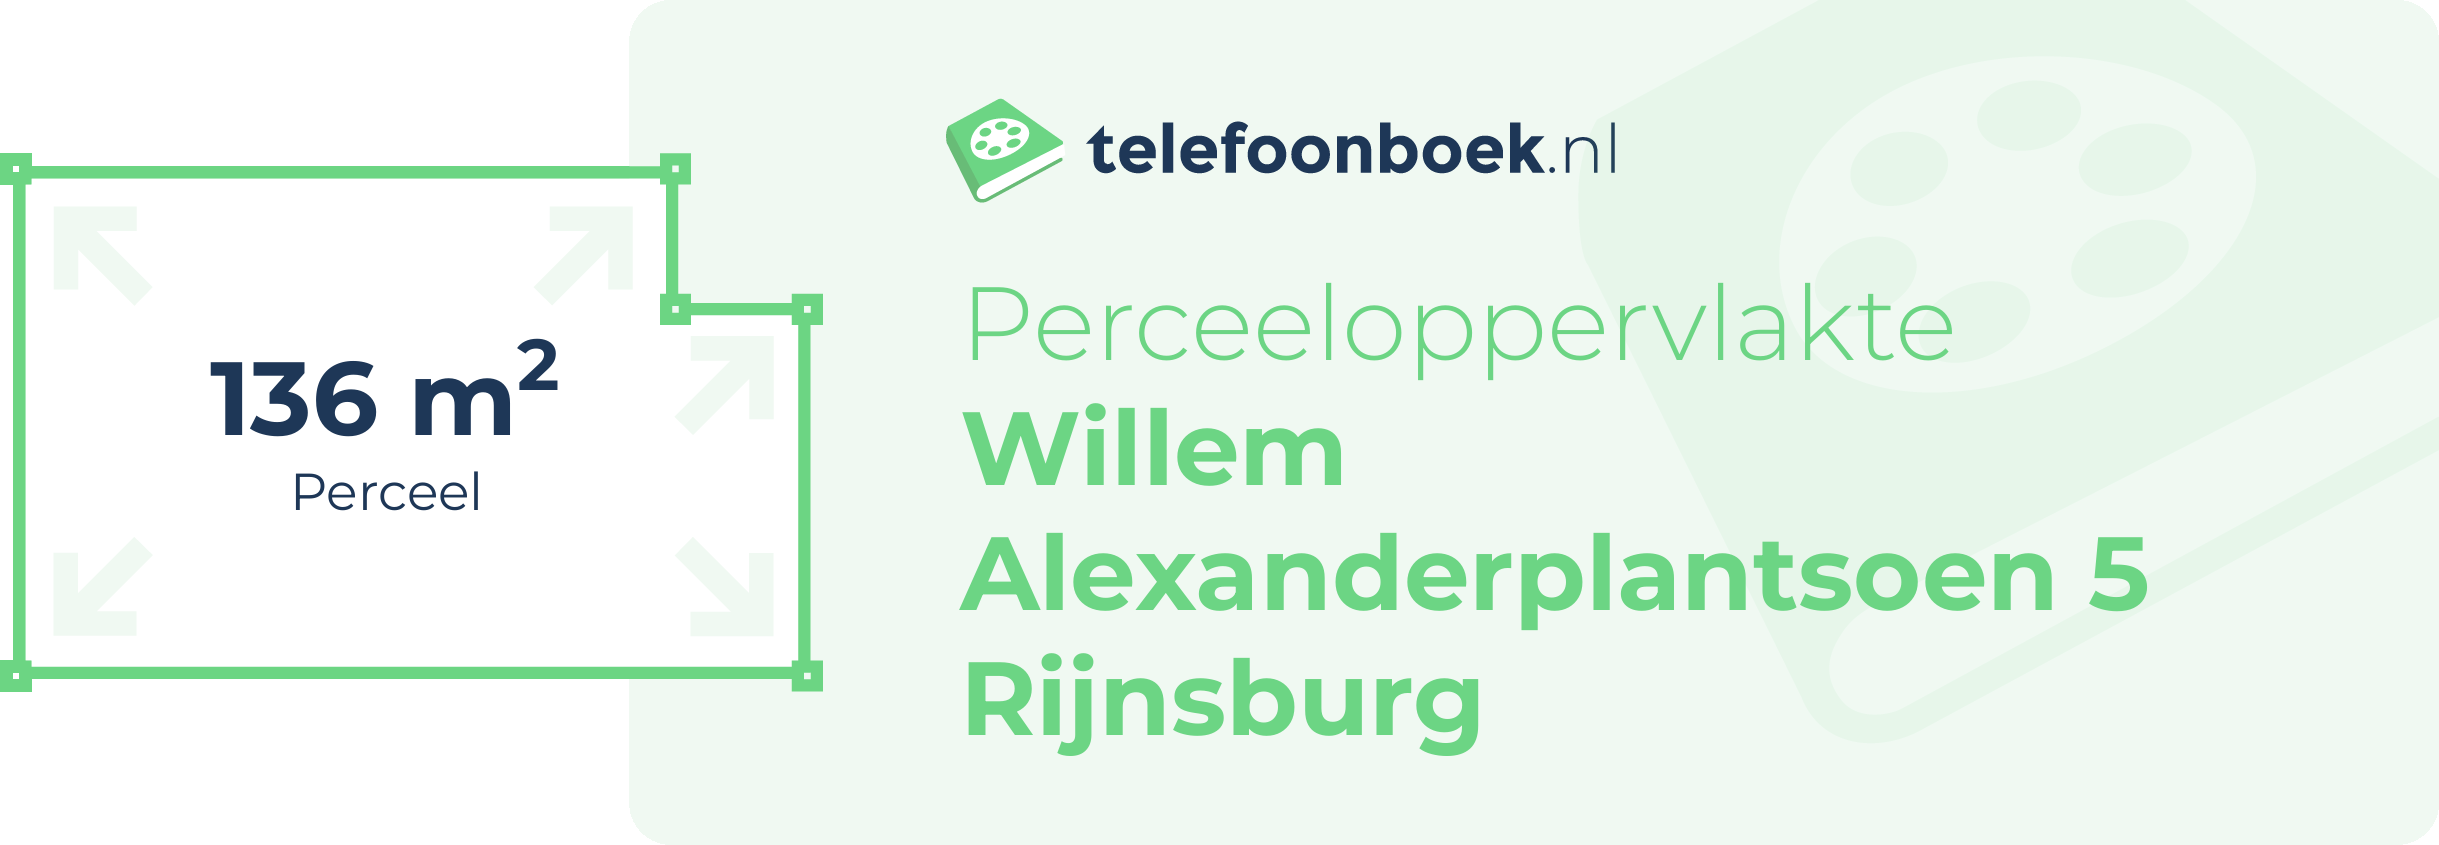 Perceeloppervlakte Willem Alexanderplantsoen 5 Rijnsburg